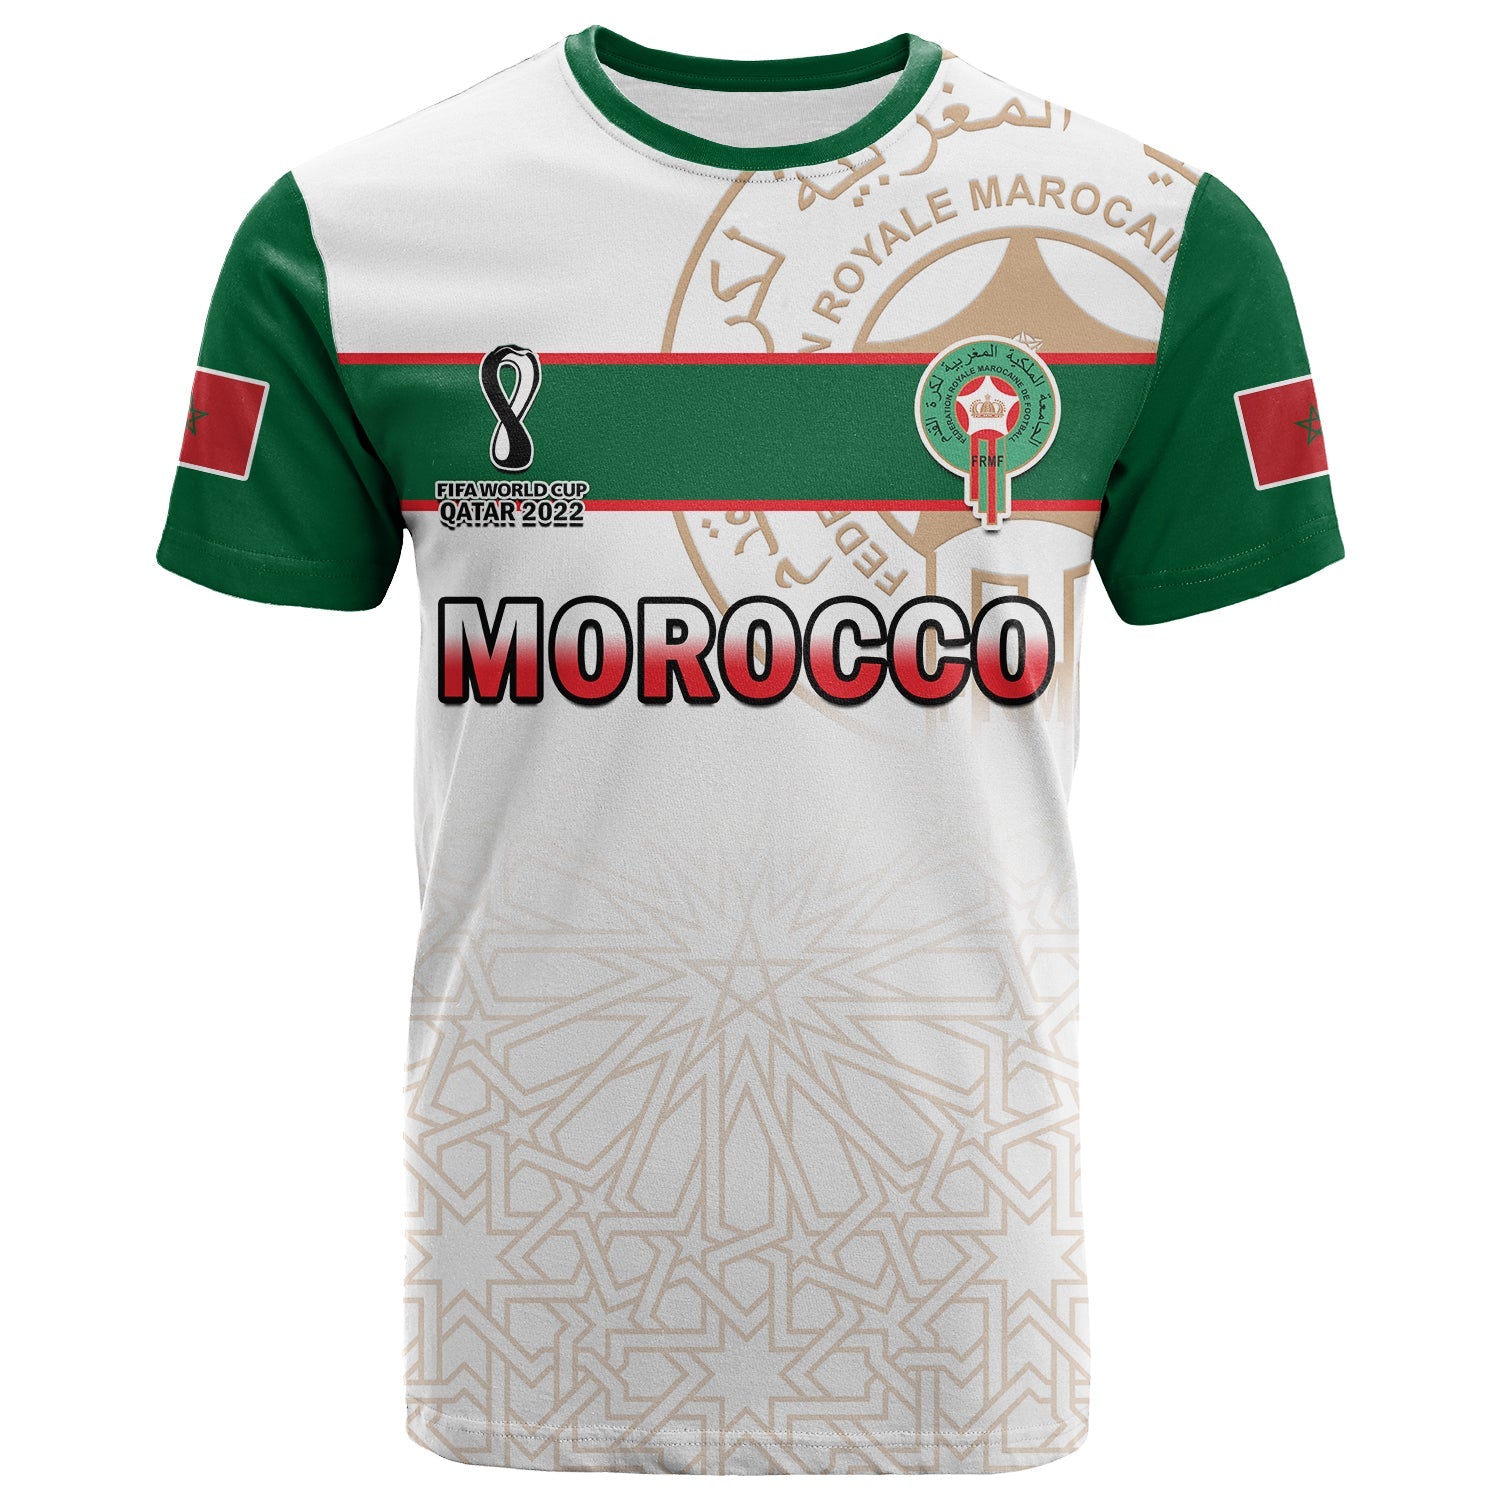 morocco-football-t-shirt-atlas-lions-white-world-cup-2022